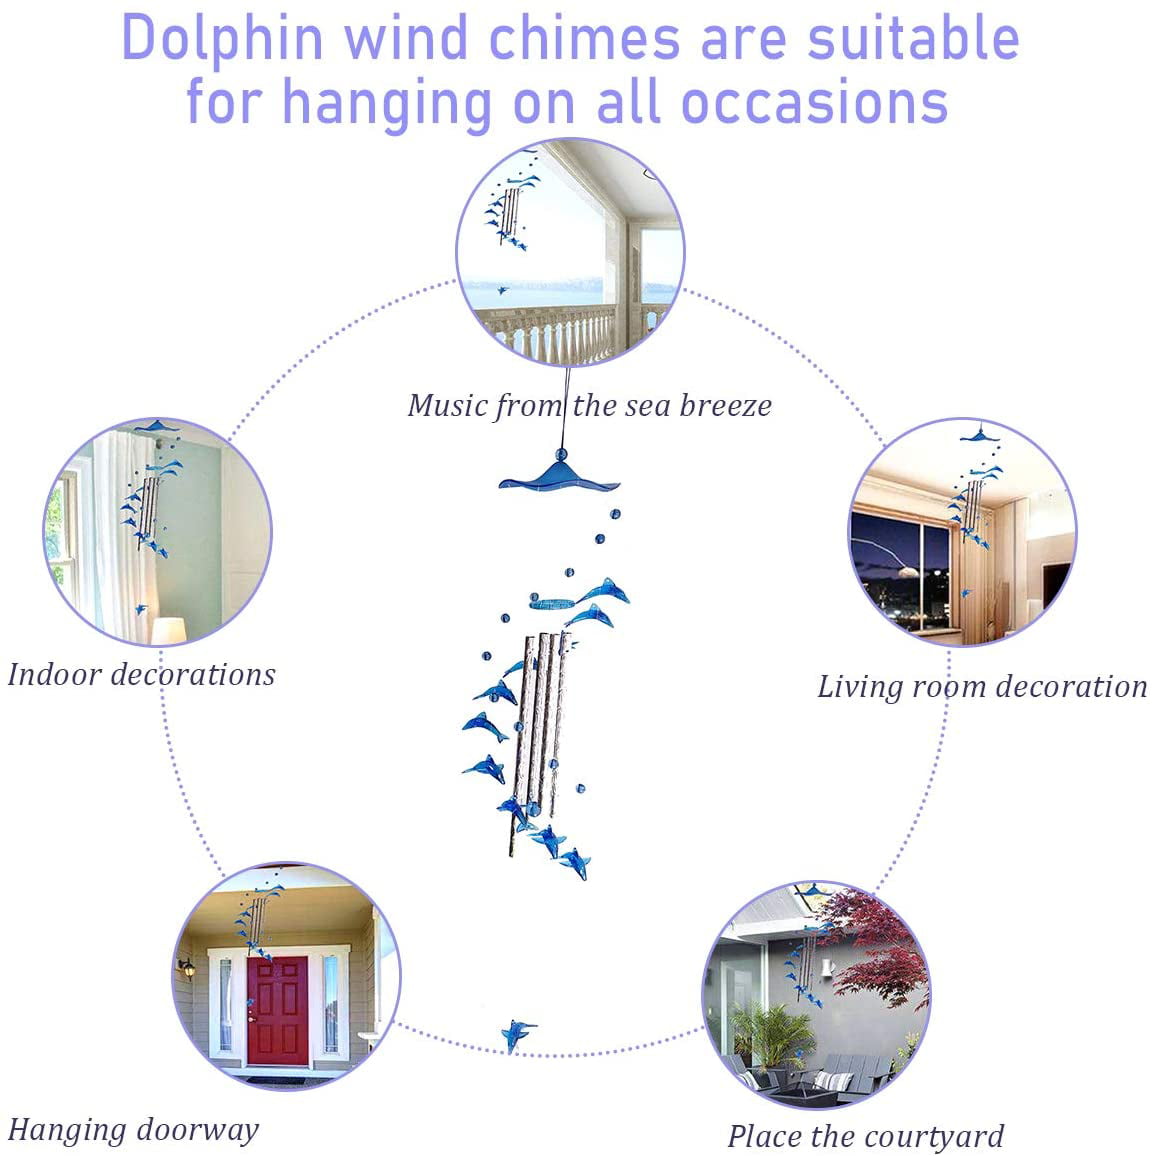 WOMEN Dolphin Wind Chimes (Blue) Outdoor Corridors, Lawns, Gardens